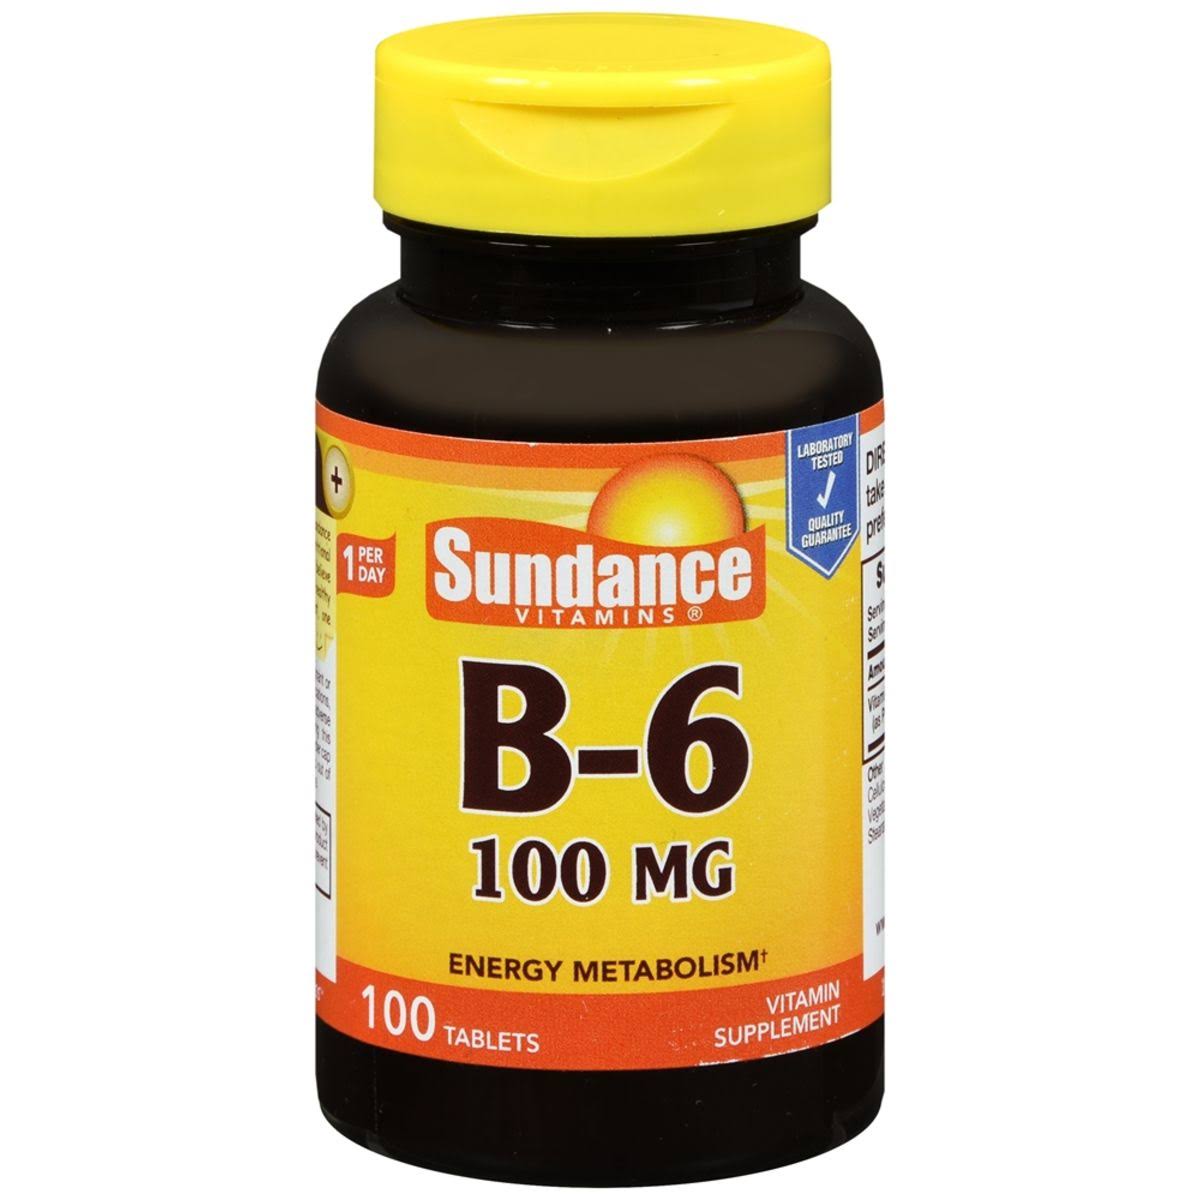 Sundance Vitamins B6 Energy Metabolism Vitamin Supplement - 100 Tablets